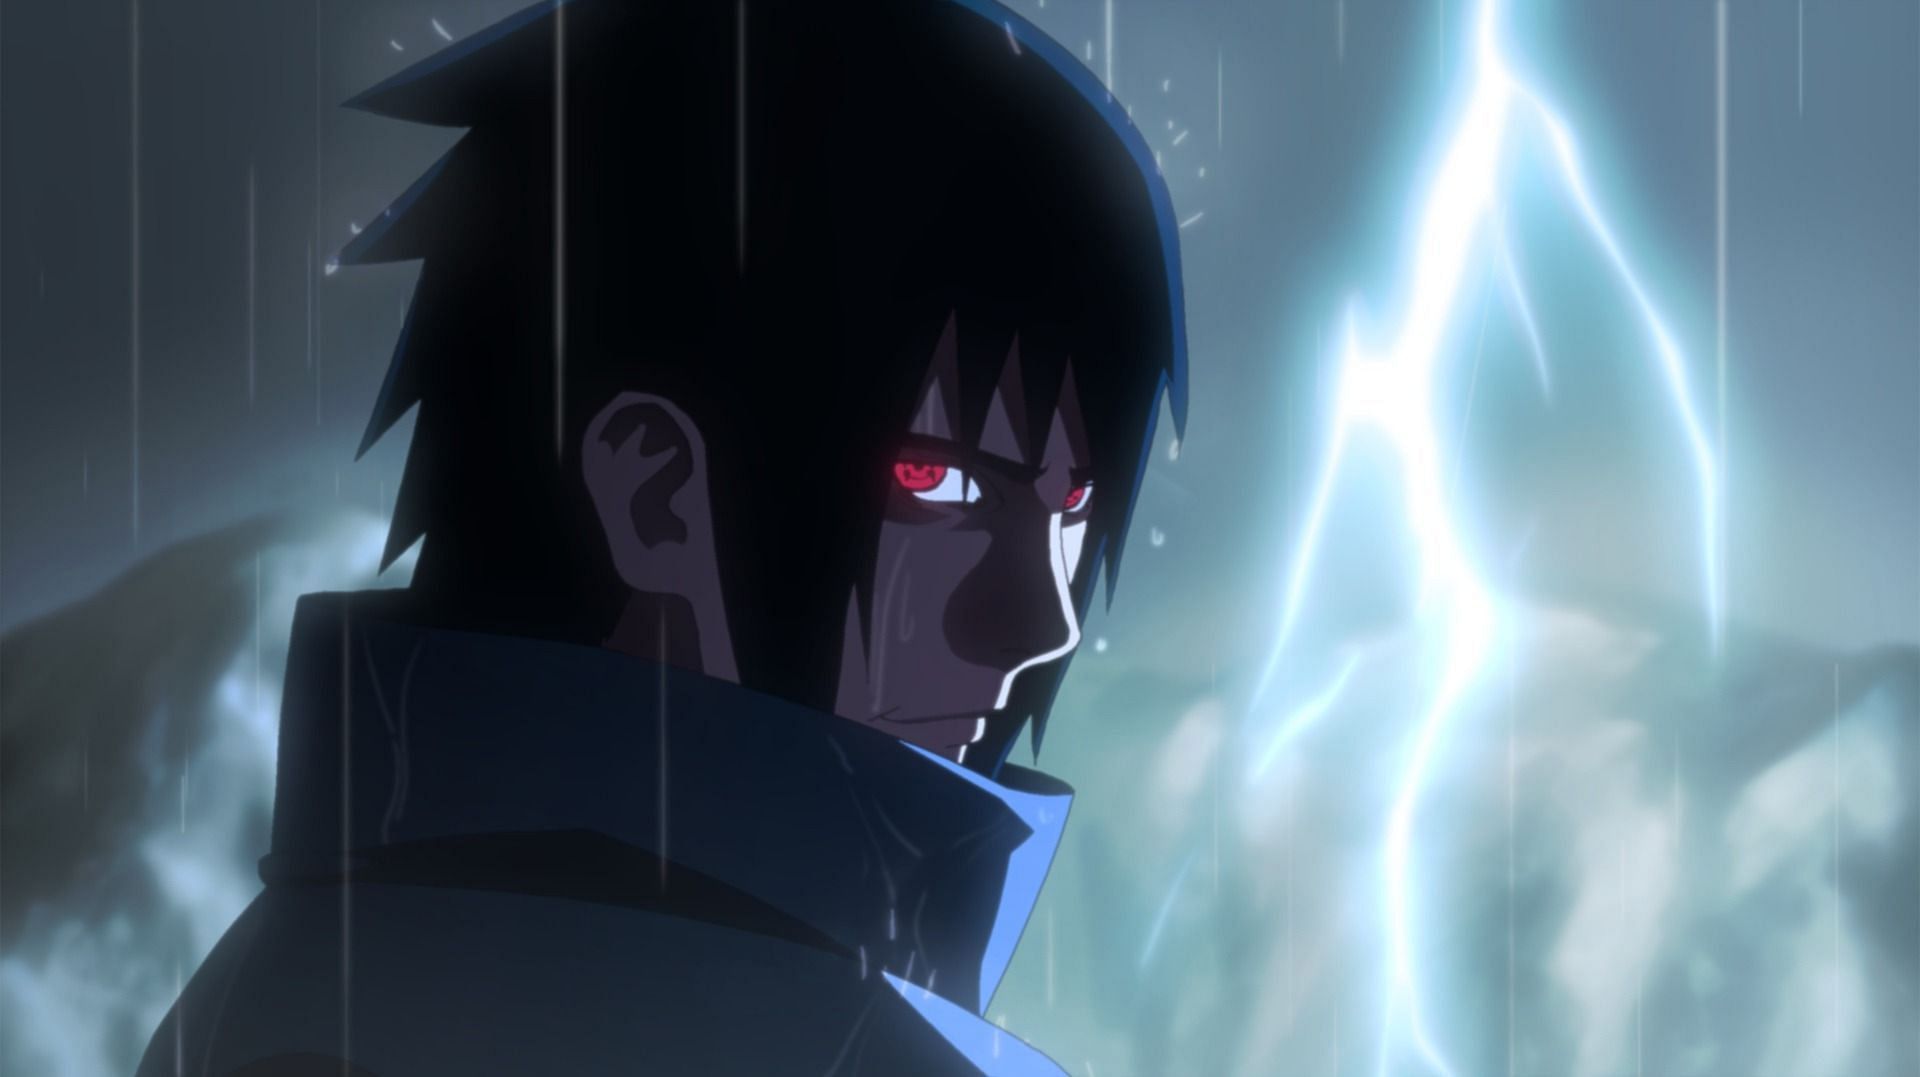 Sasuke Uchiha as seen in Naruto (Image via Studio Pierrot)